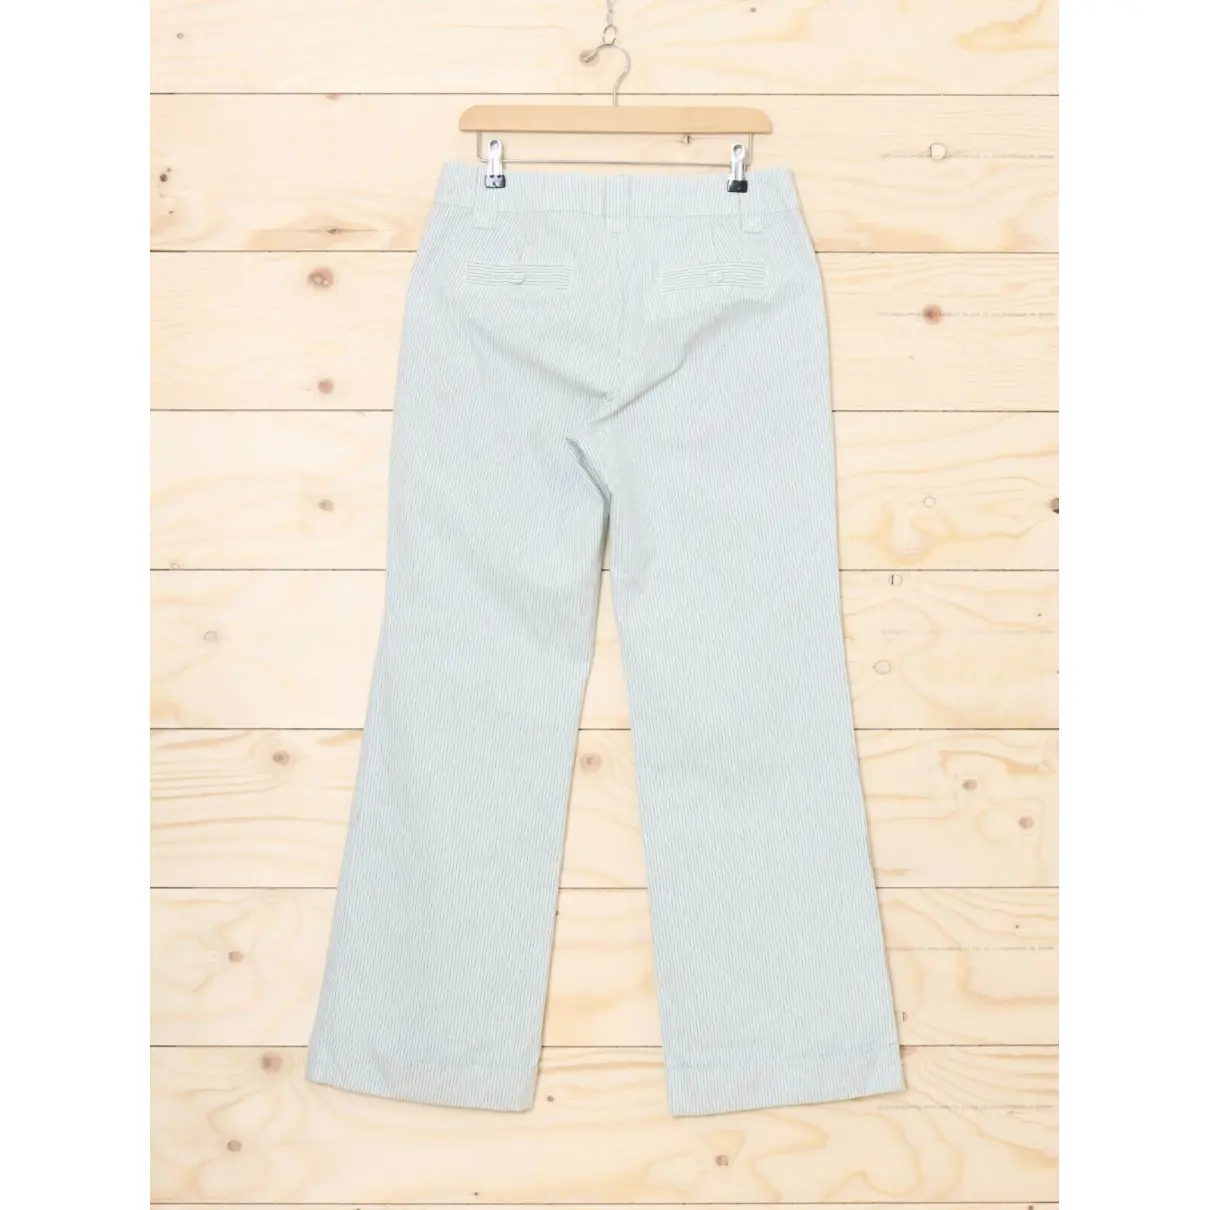 Buy Boden Large pants online